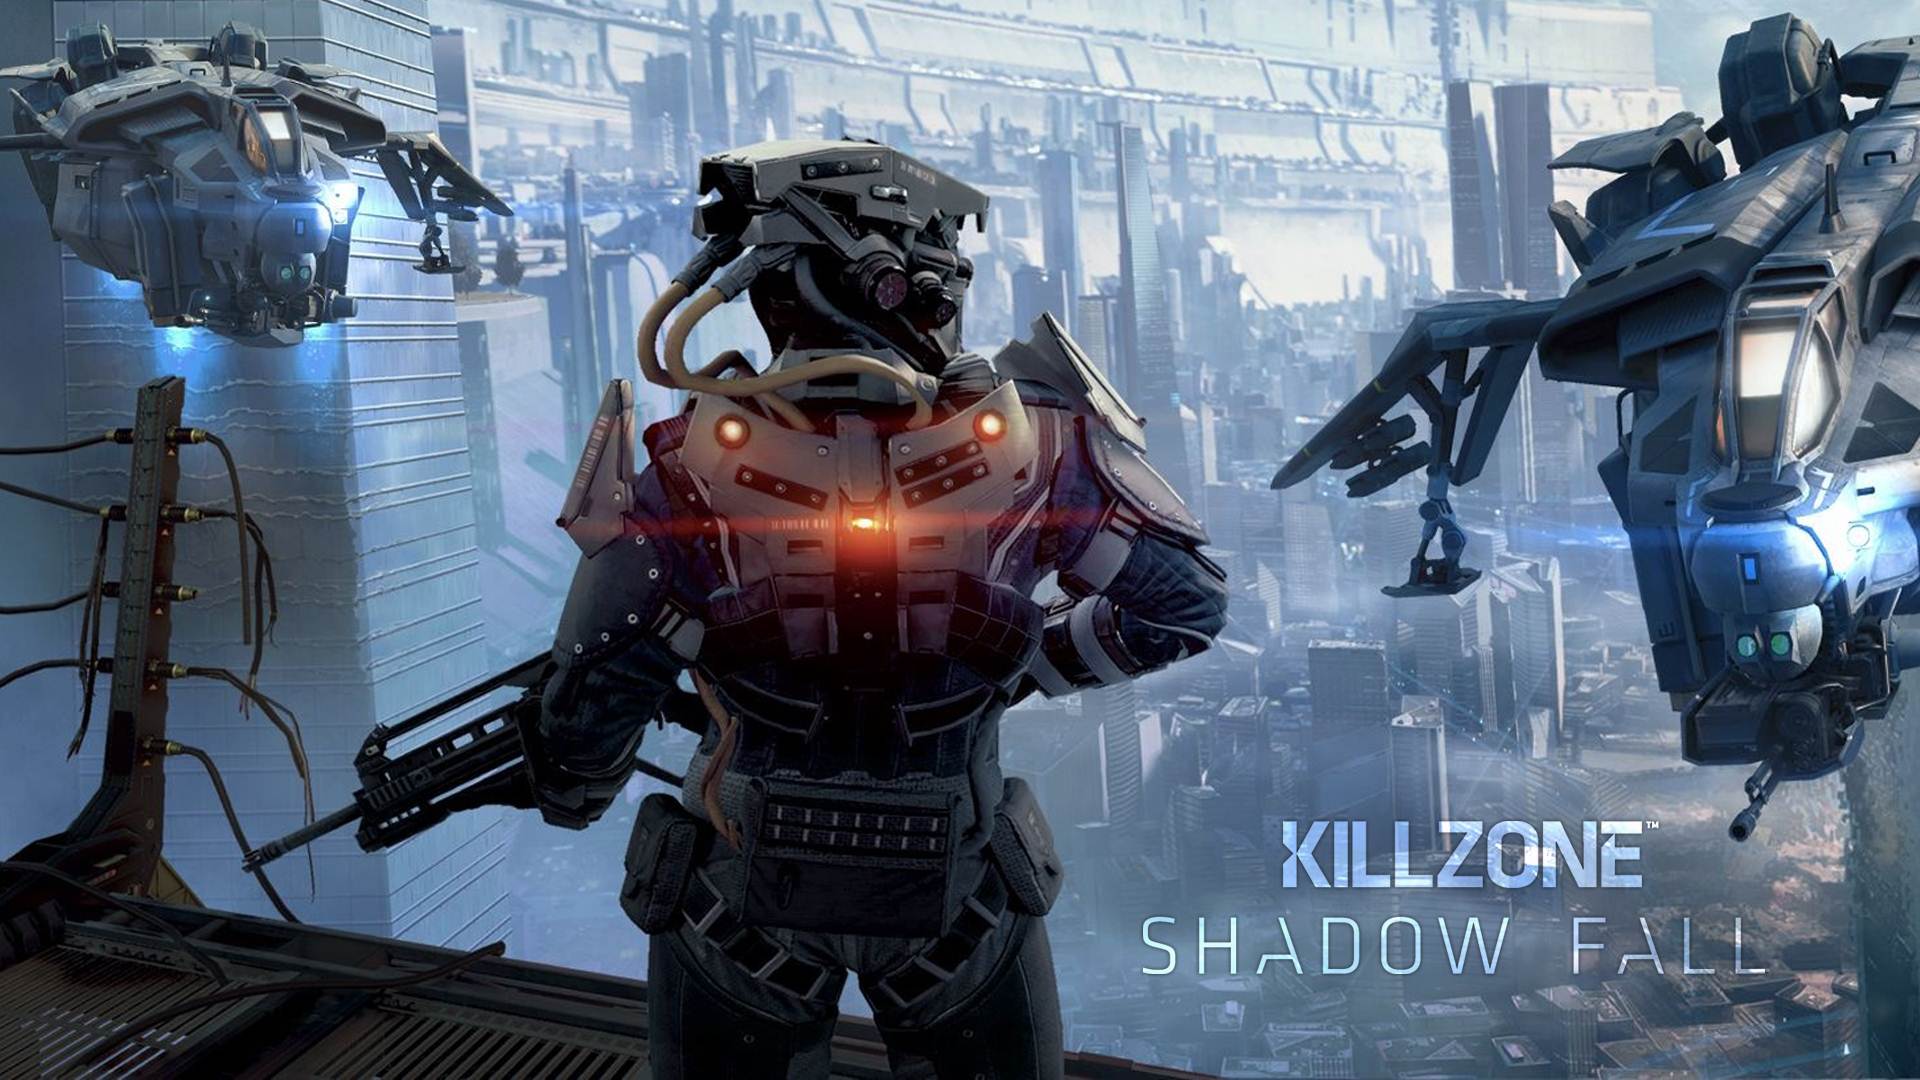 Killzone Shadow Fall Ps4 Wallpaper In HD Gamingbolt Video Game